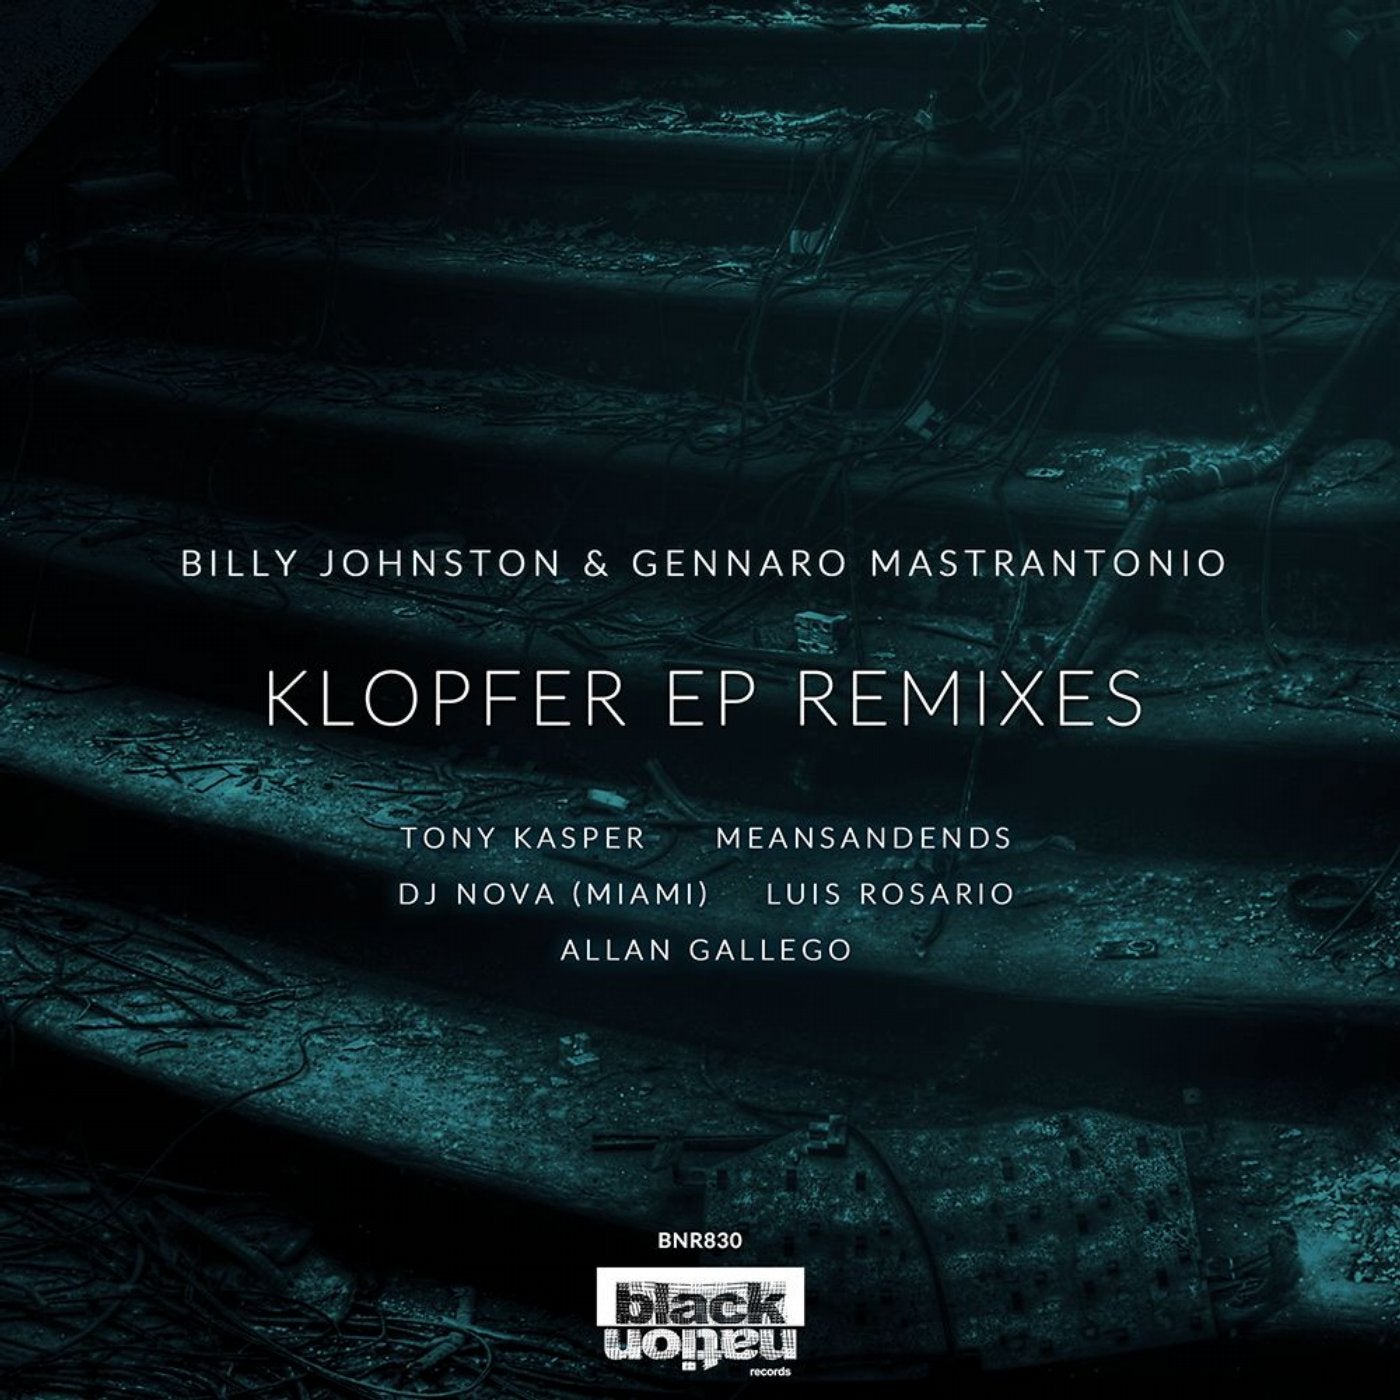 Klopfer EP Remixes